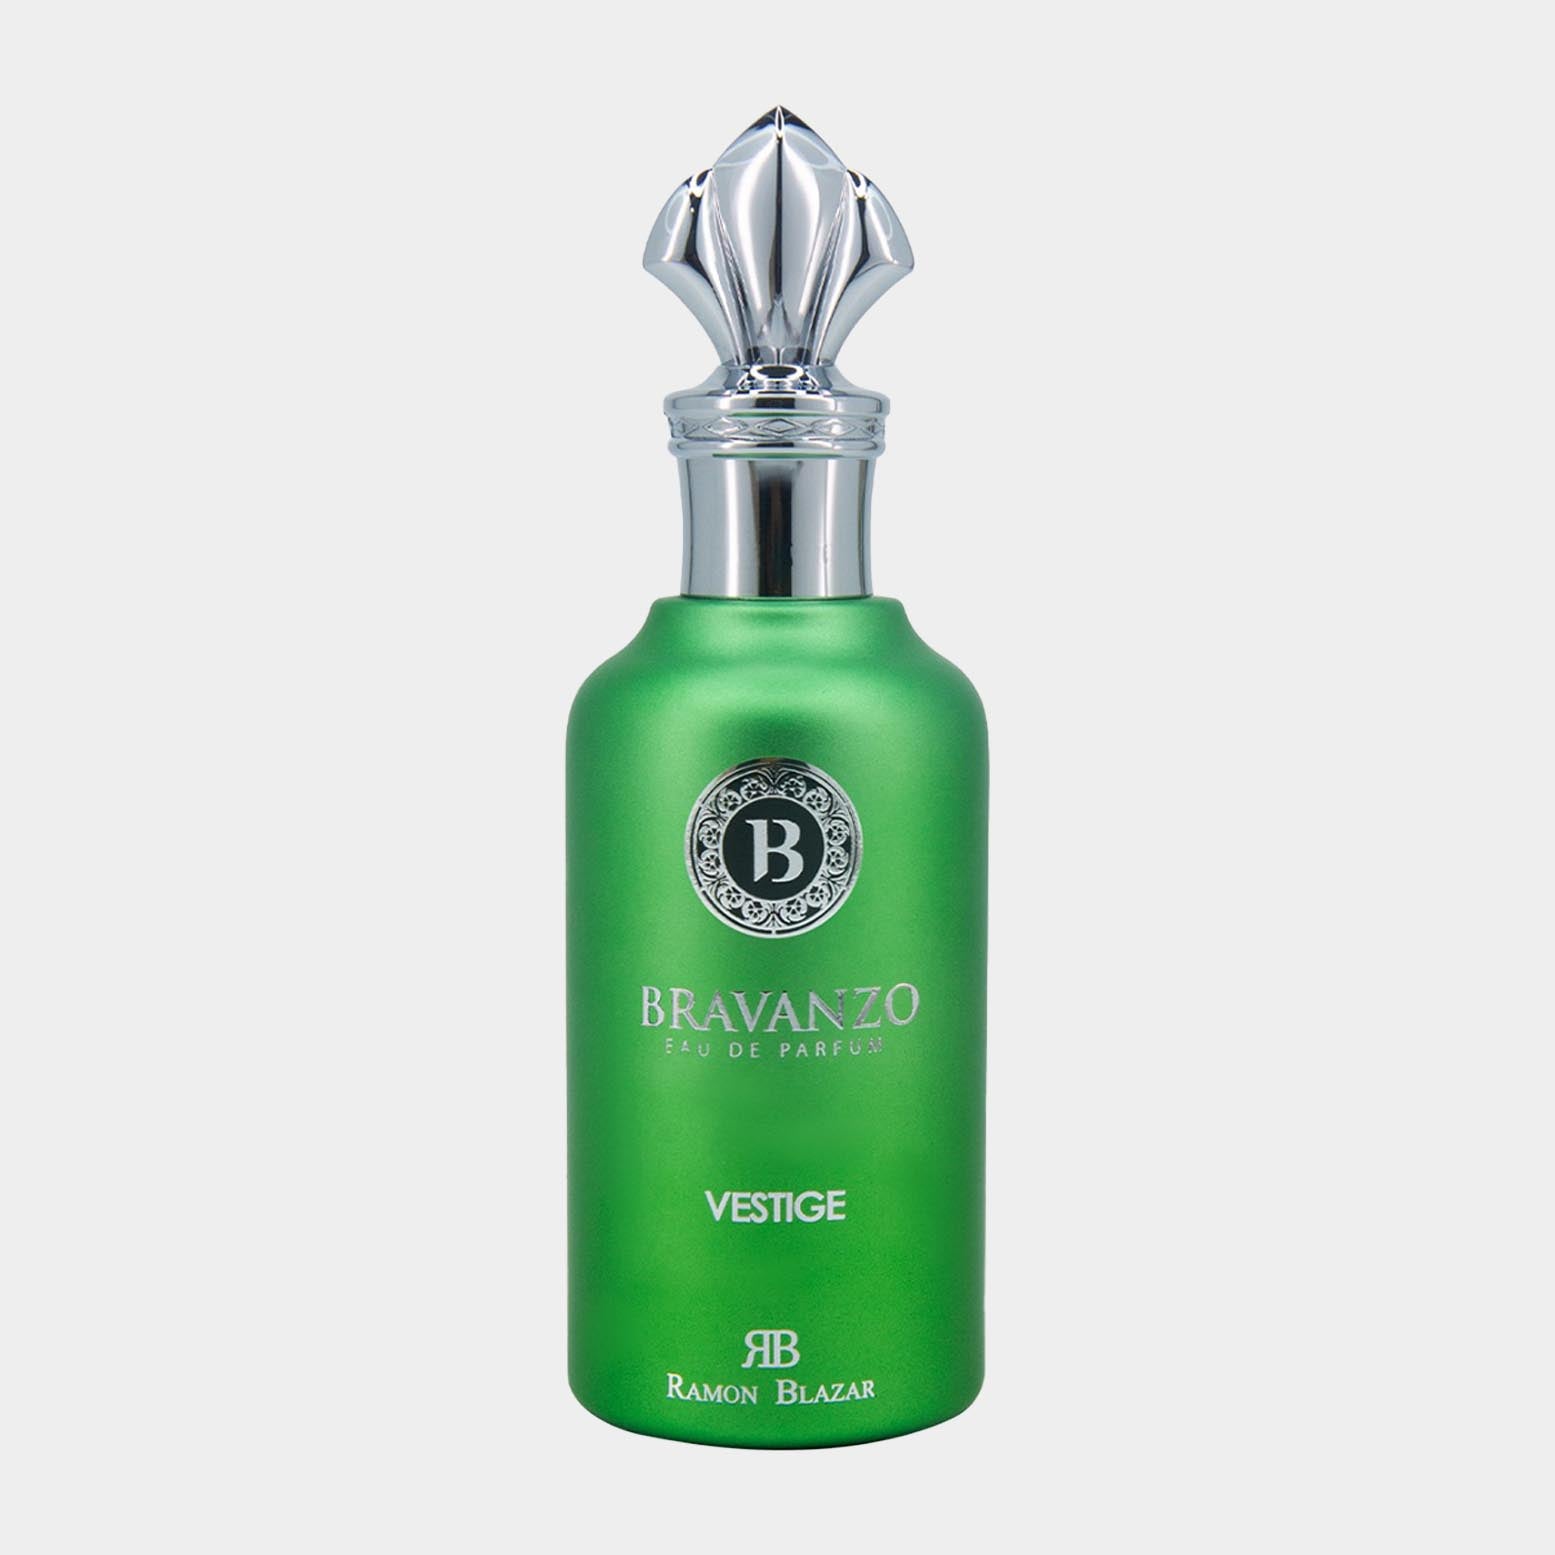 De parfum Bravanzo Vestige.